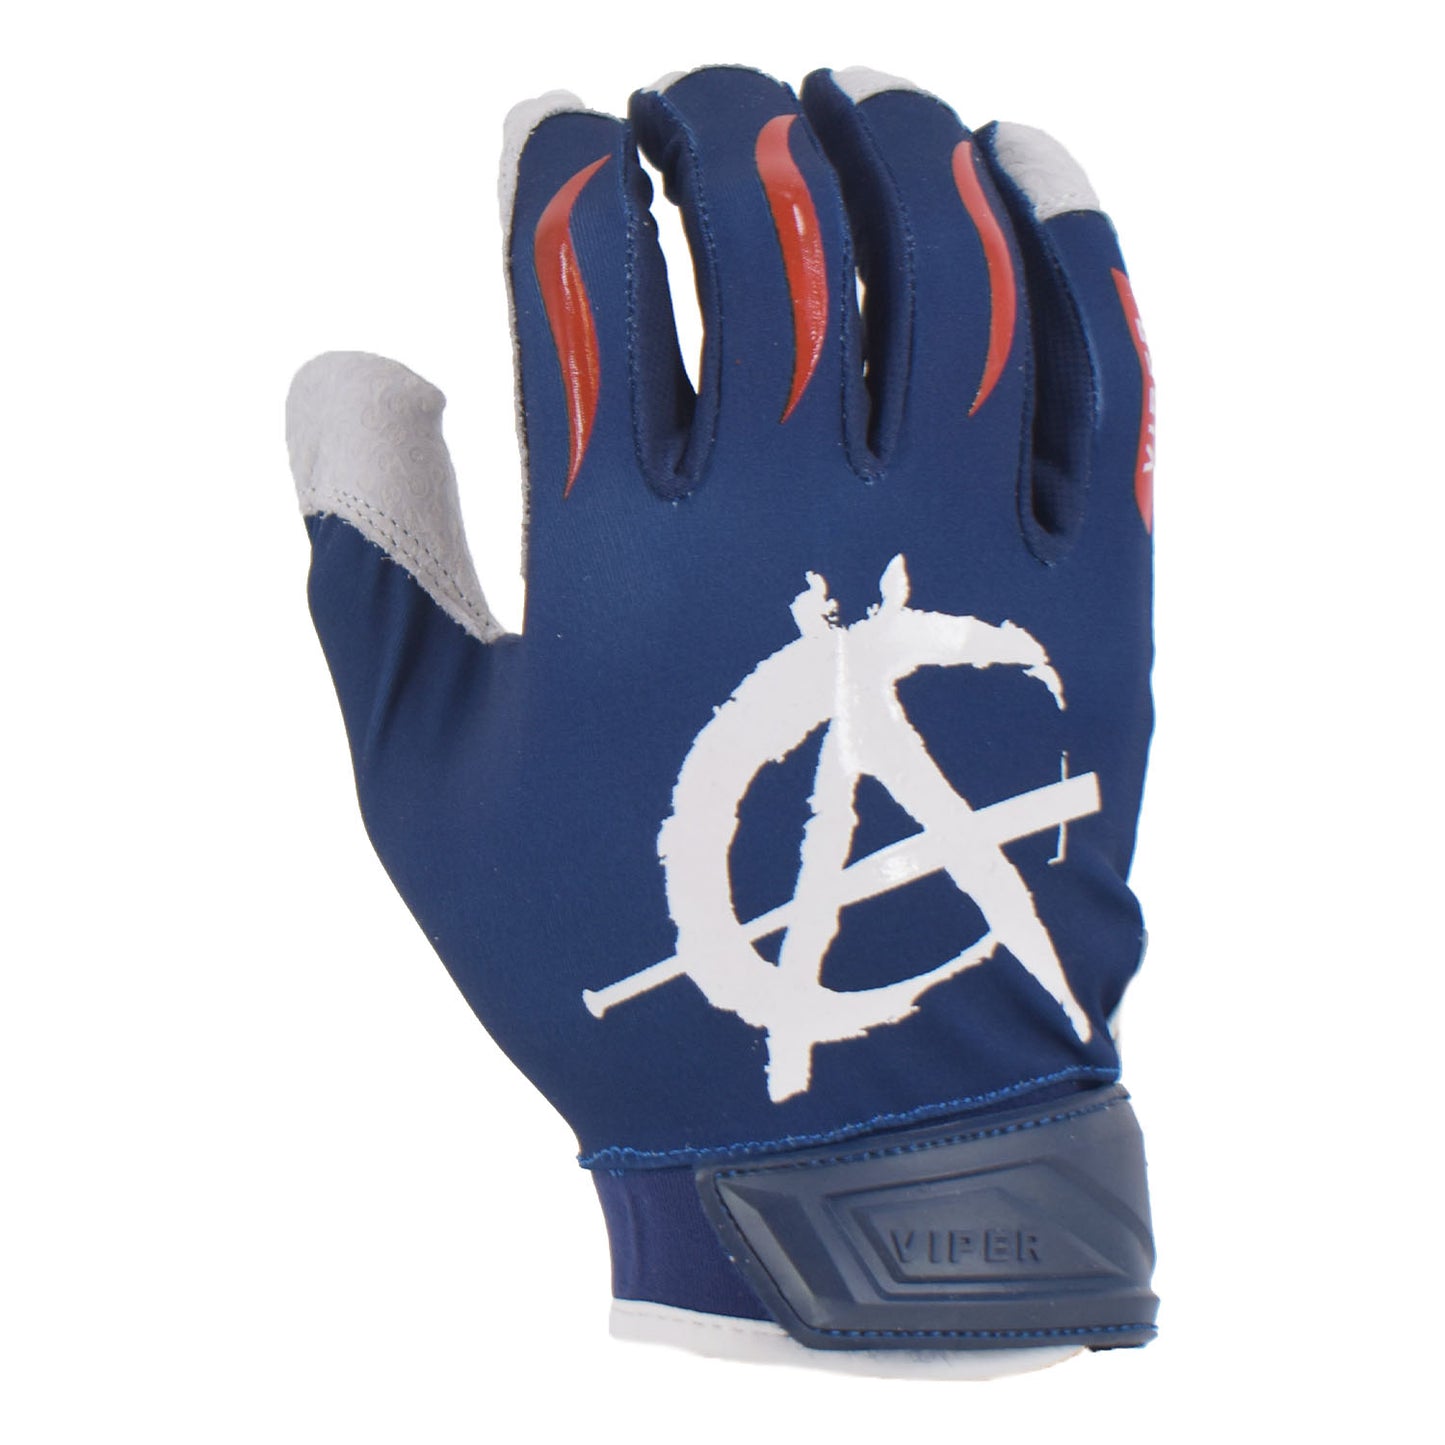 Viper Lite Premium Batting Gloves Leather Palm - Anarchy Edition Navy/Red/White